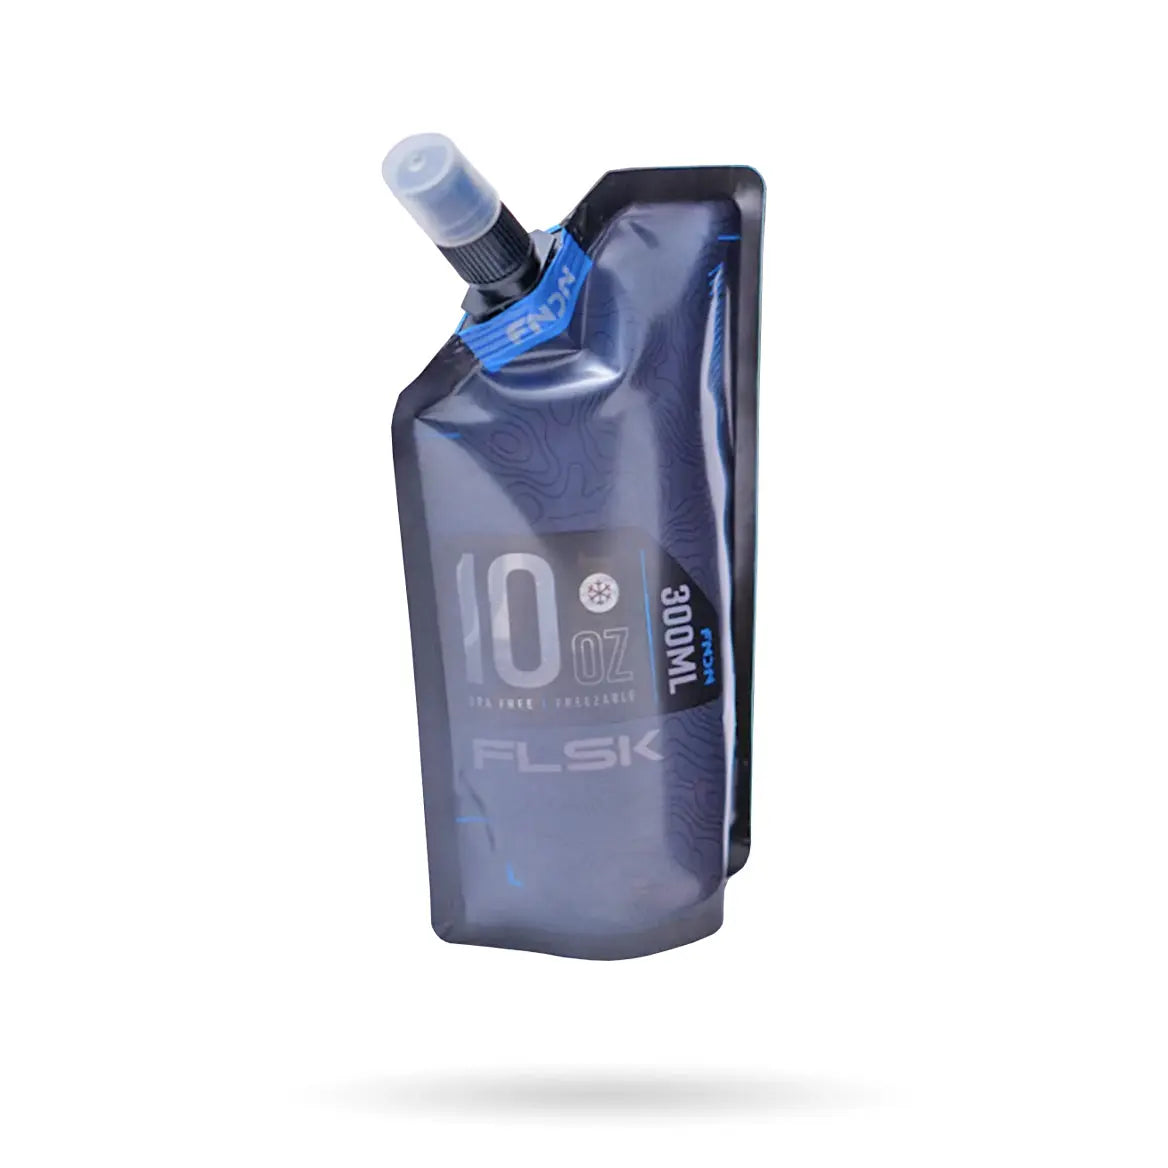 FNDN 10 oz. Flexible Flask FNDN